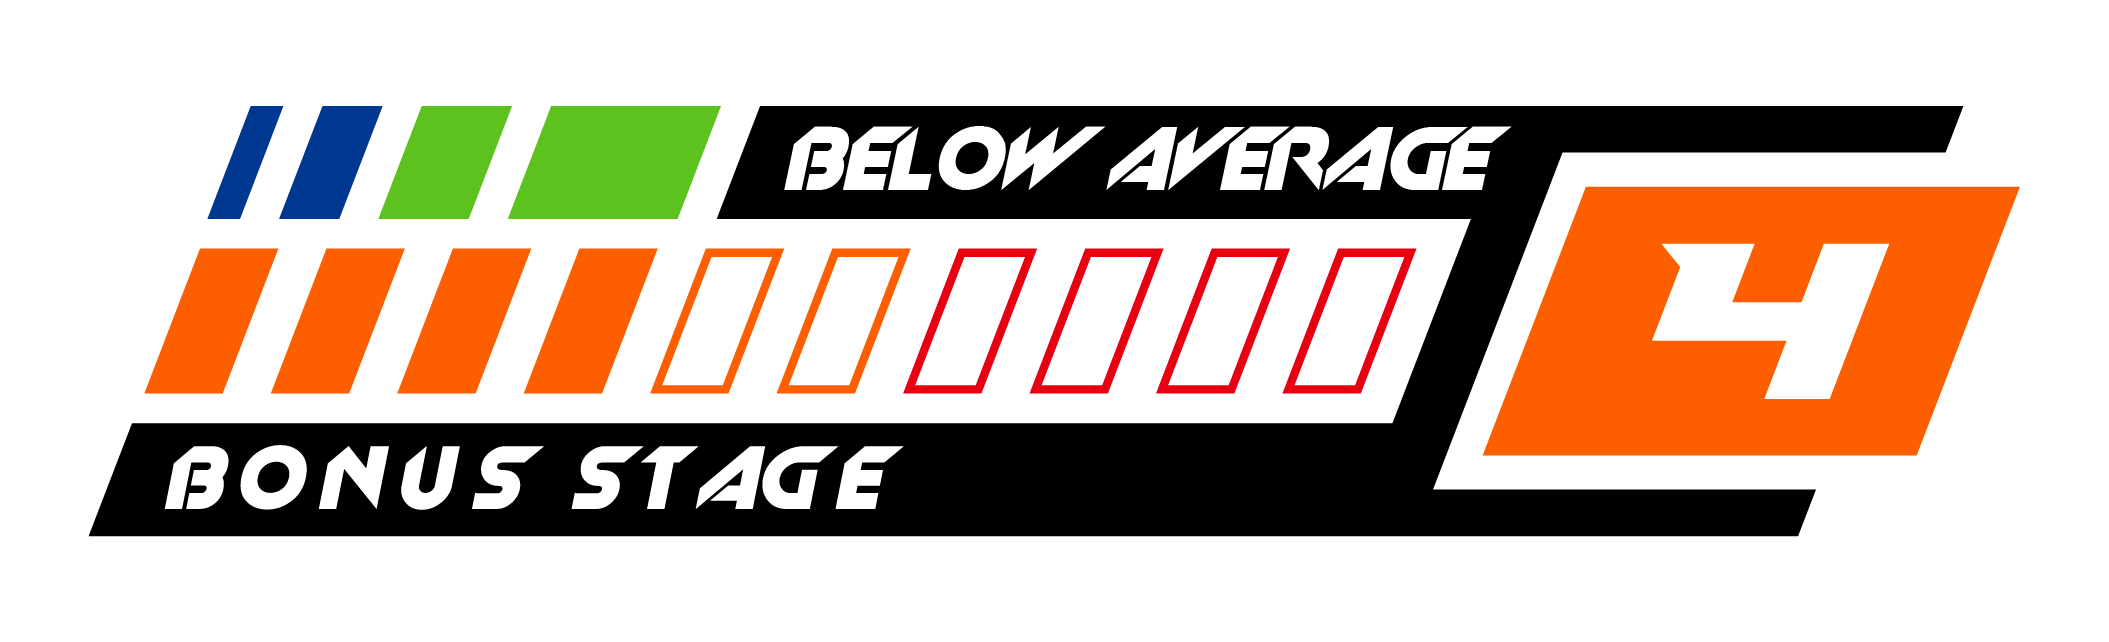 Bonus Stage Rating - Below Average 4/10